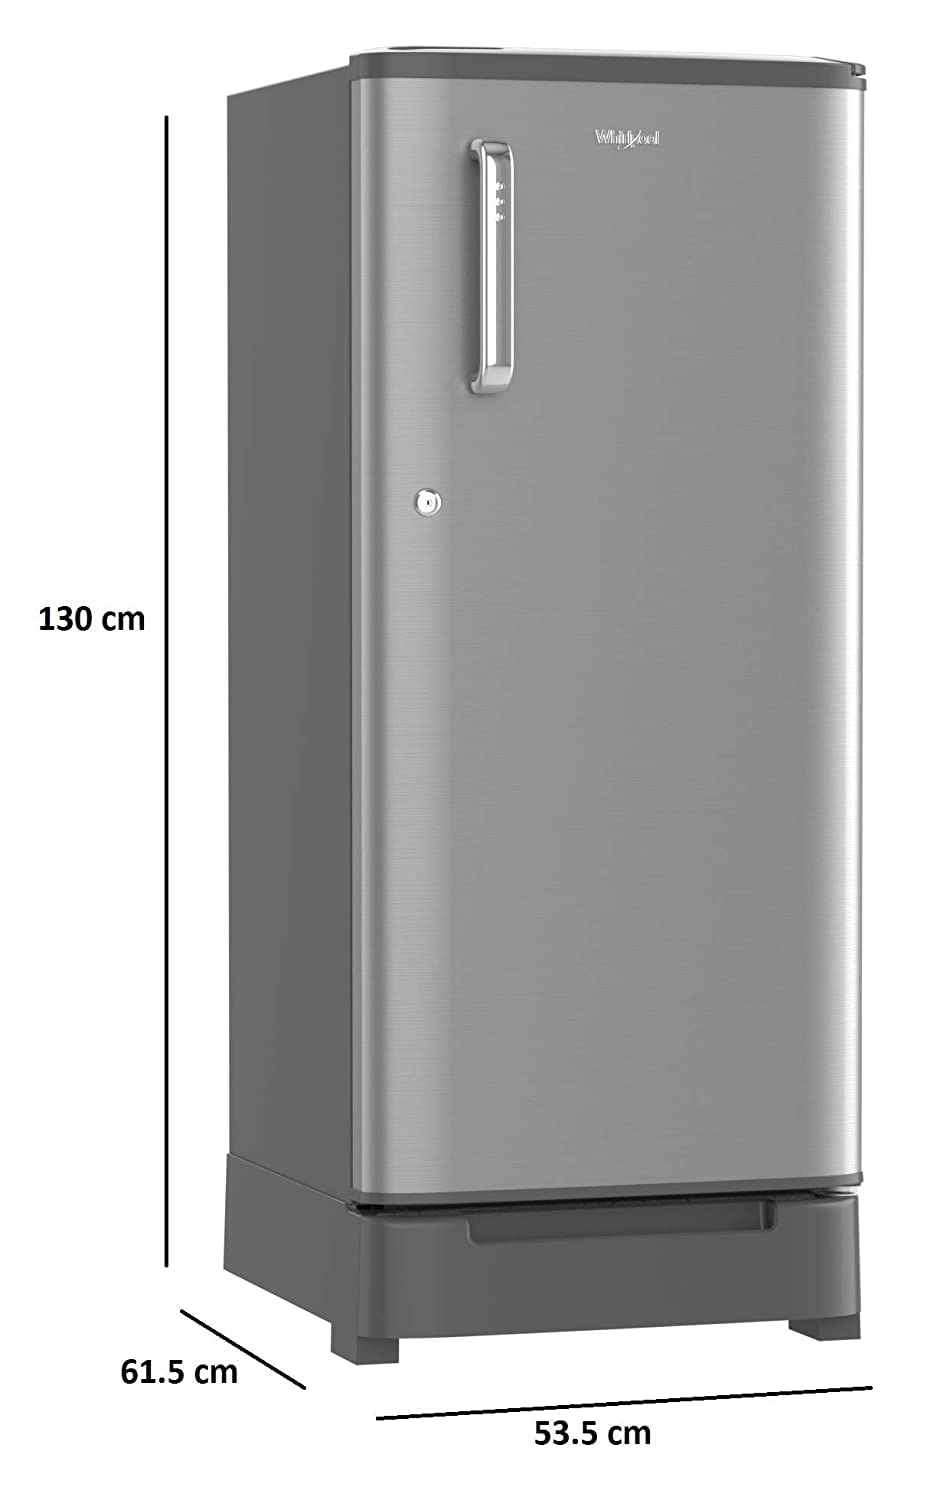 Buy SAMSUNG 184 L Direct Cool Single Door 3 Star Refrigerator